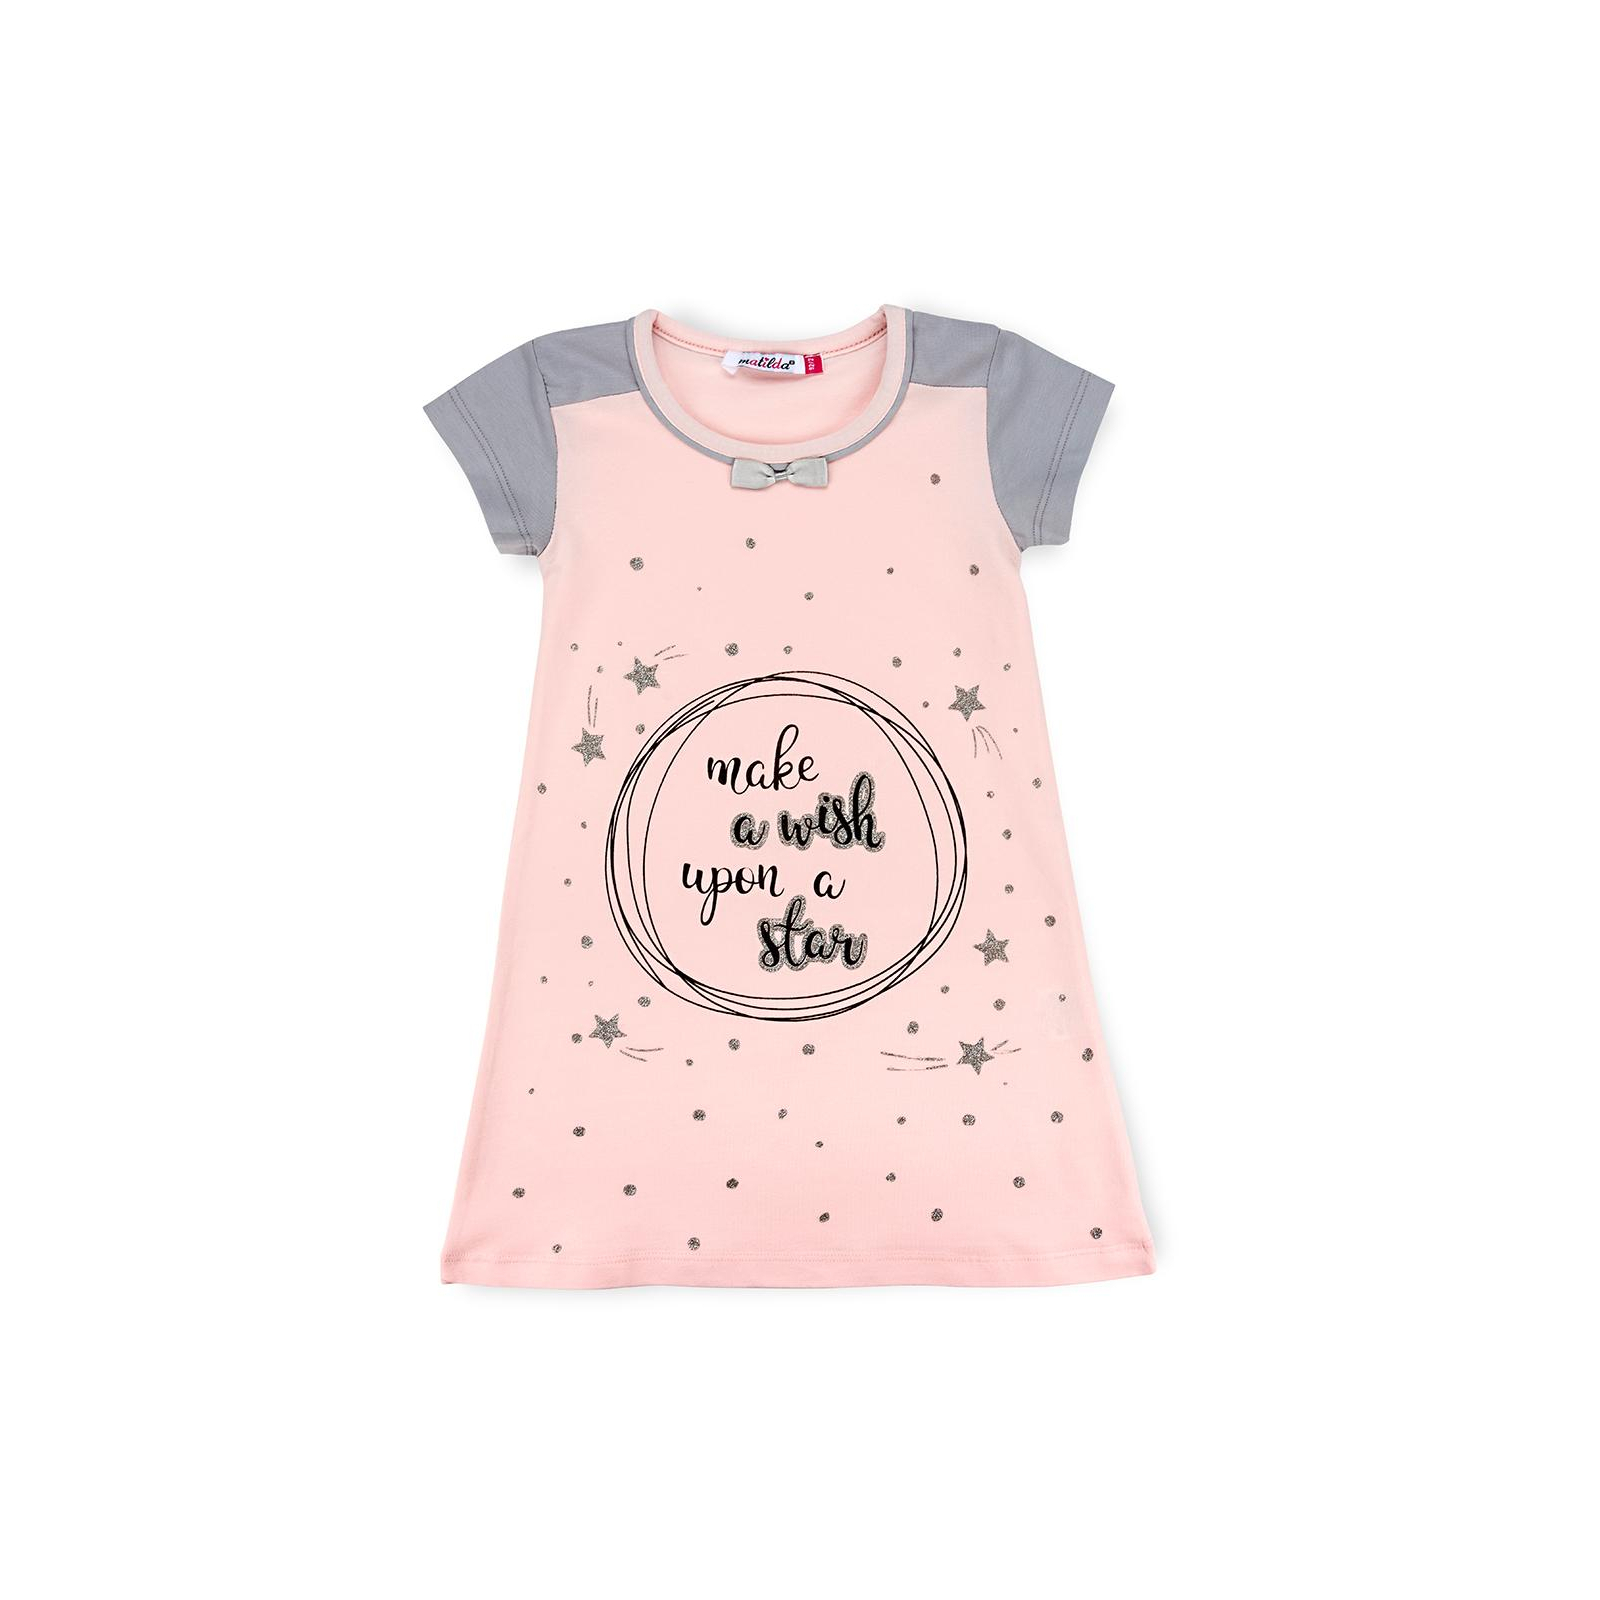 Піжама Matilda сорочка Із зірочкамі (7992-3-116G-pink)